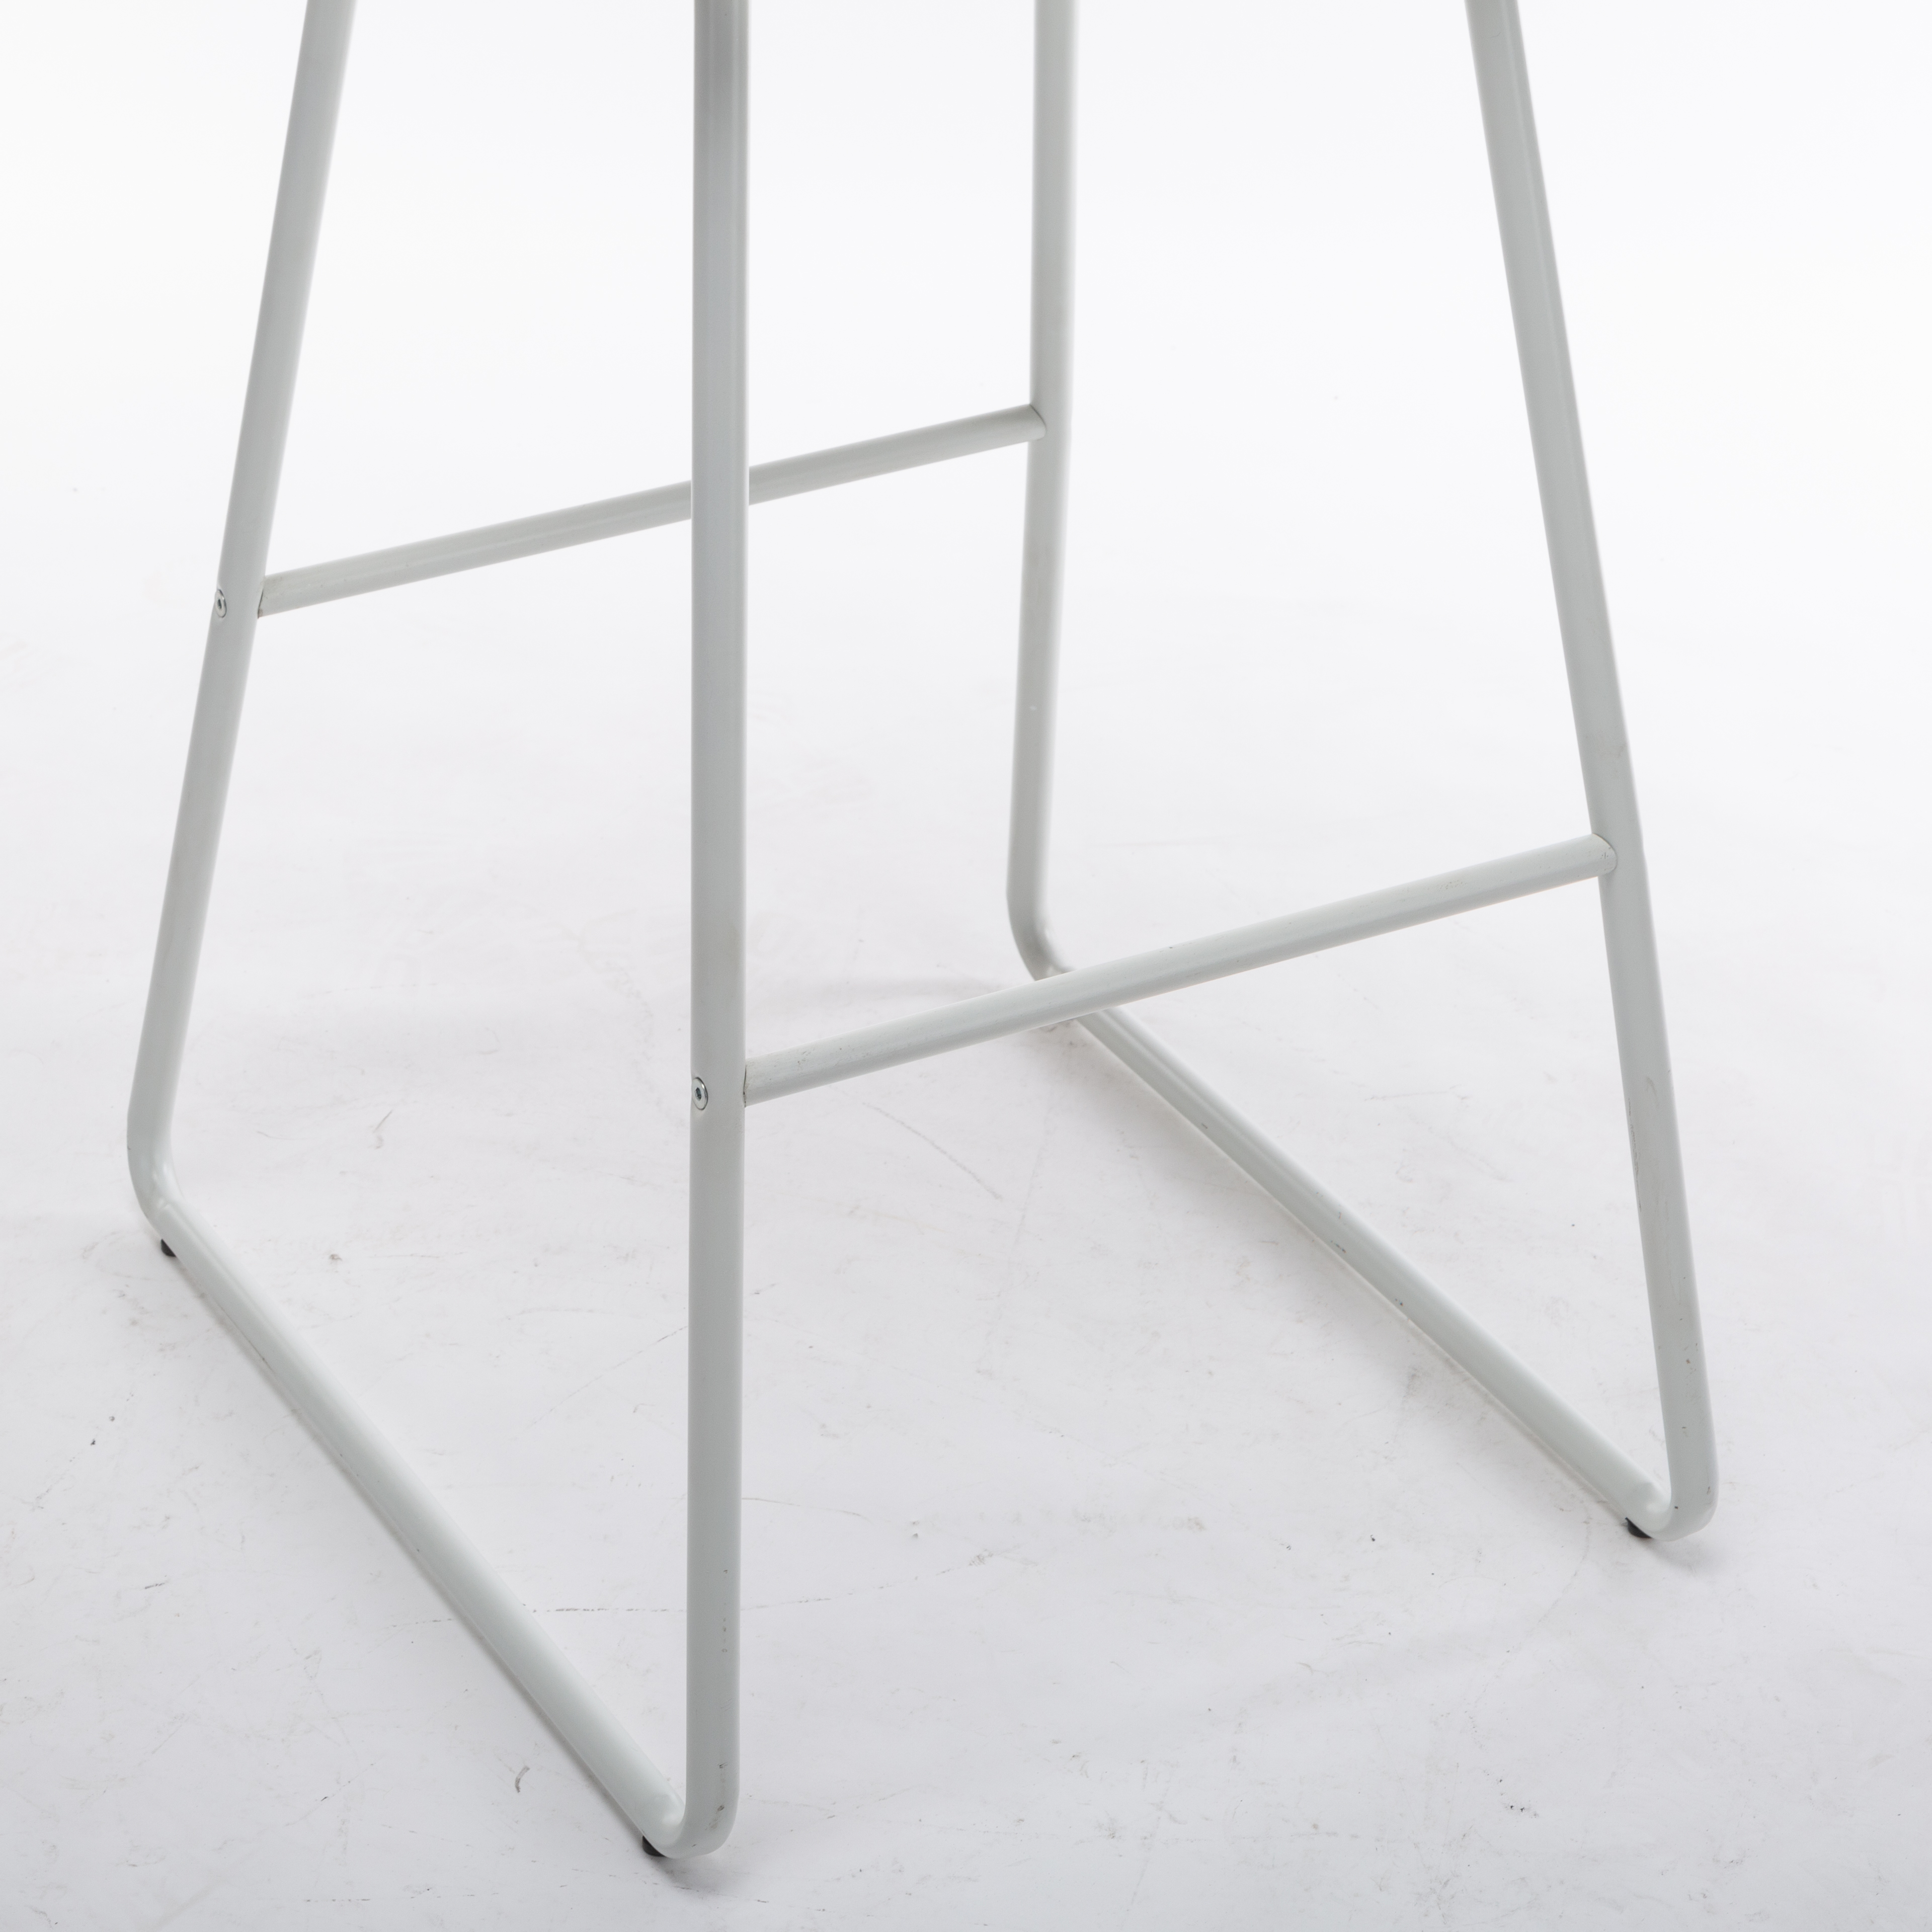 Metal barstool/Modern bar chairs/PP seat bar chair